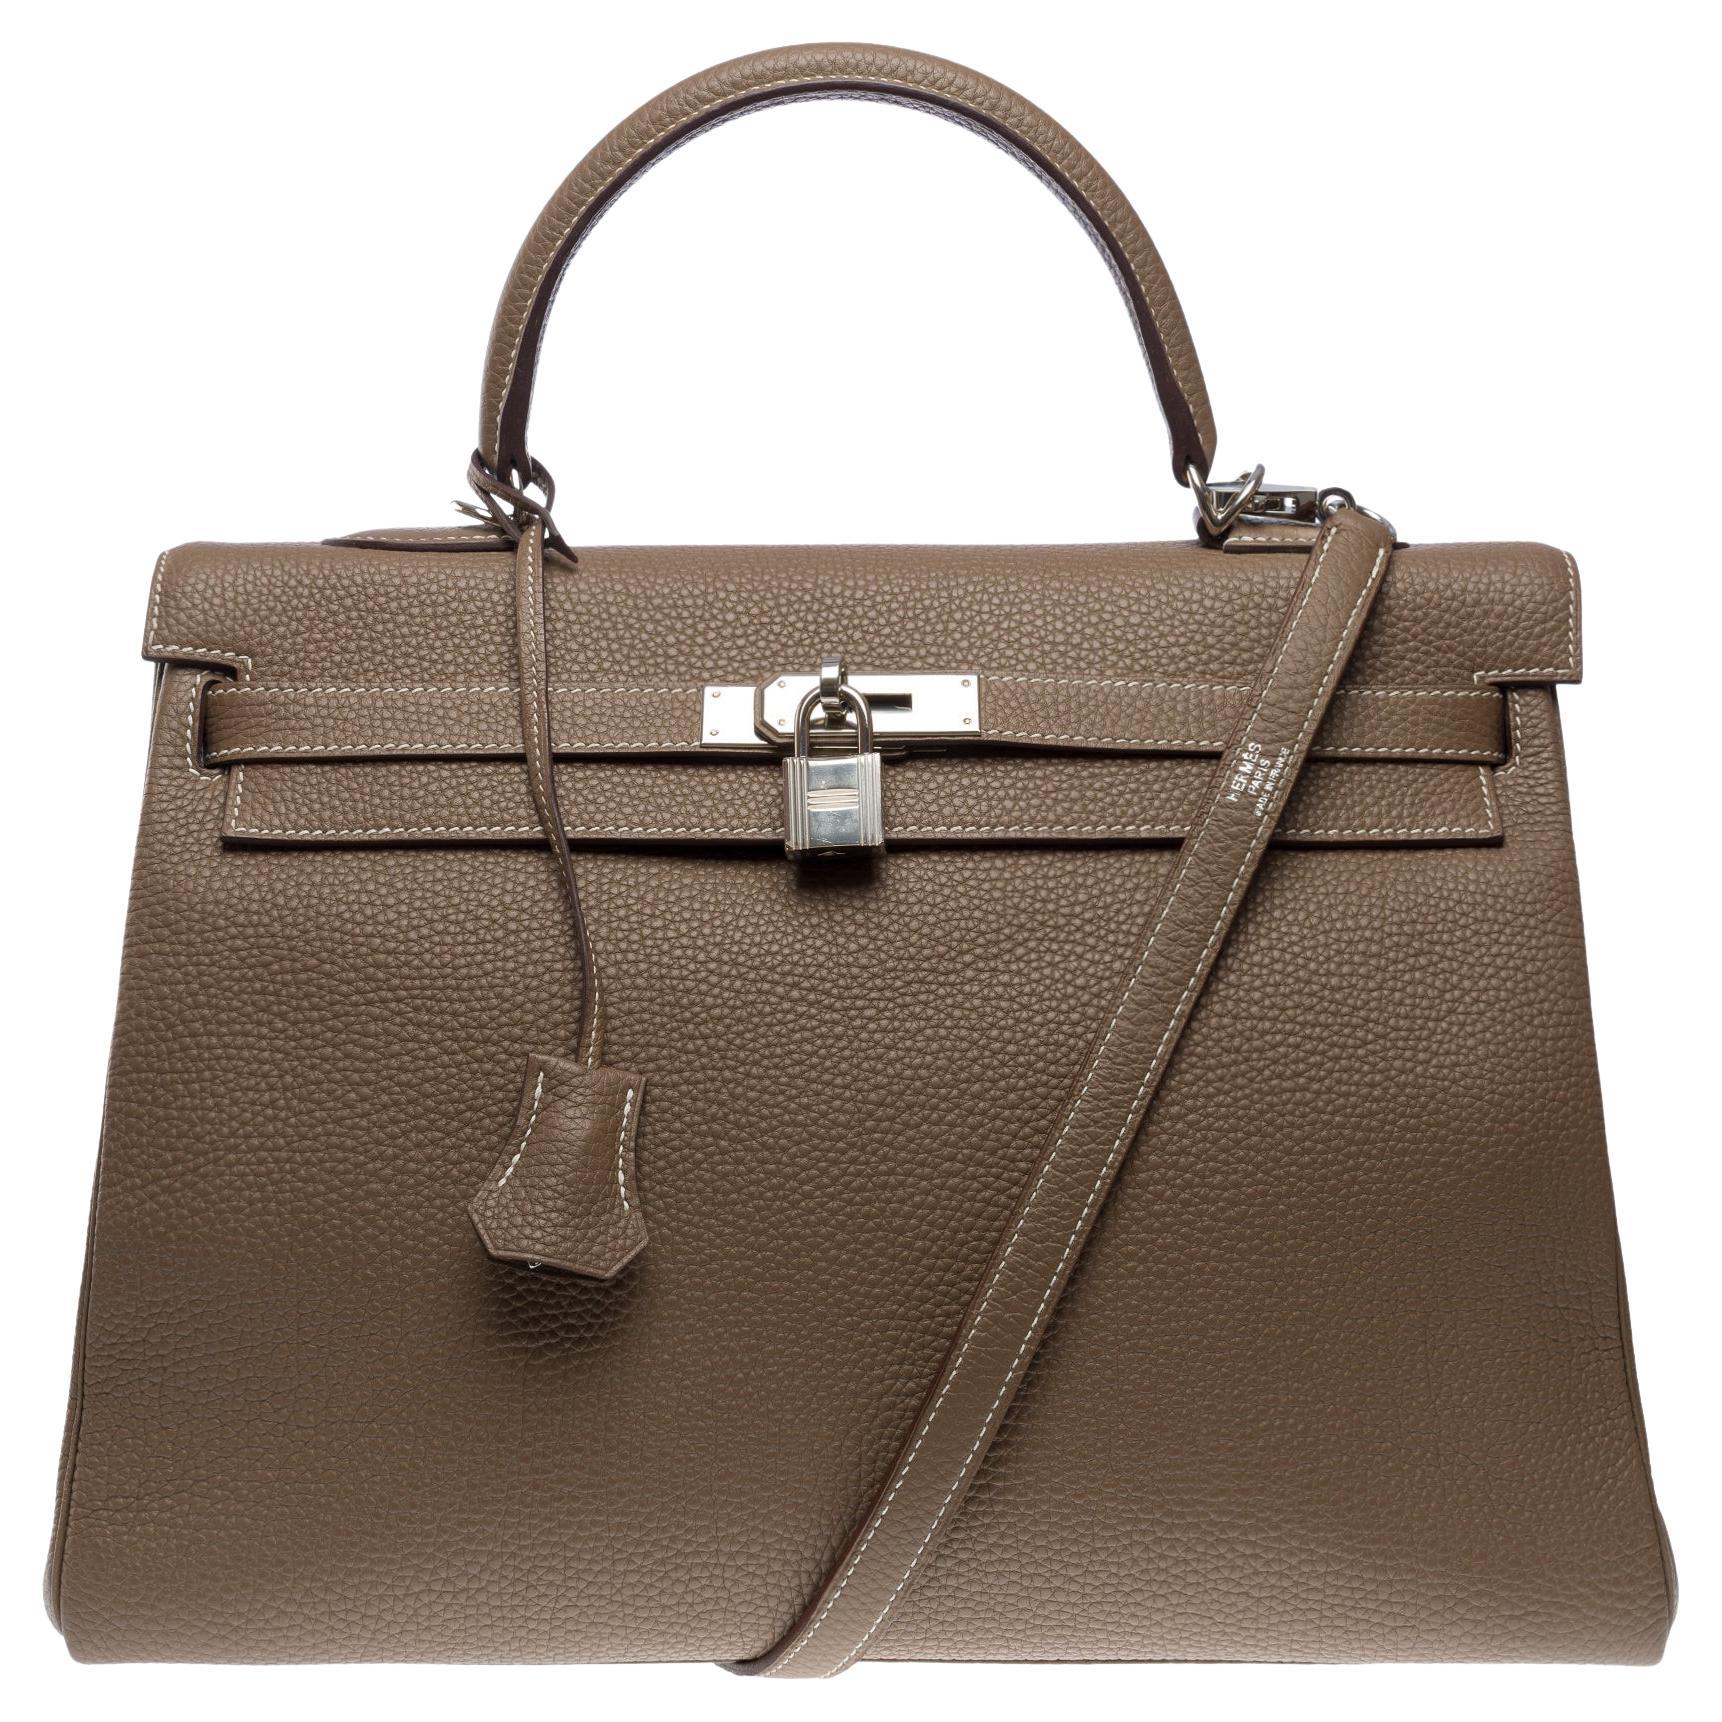 Almost New Hermès Kelly 35 retourne handbag strap in Etoupe Togo leather, SHW